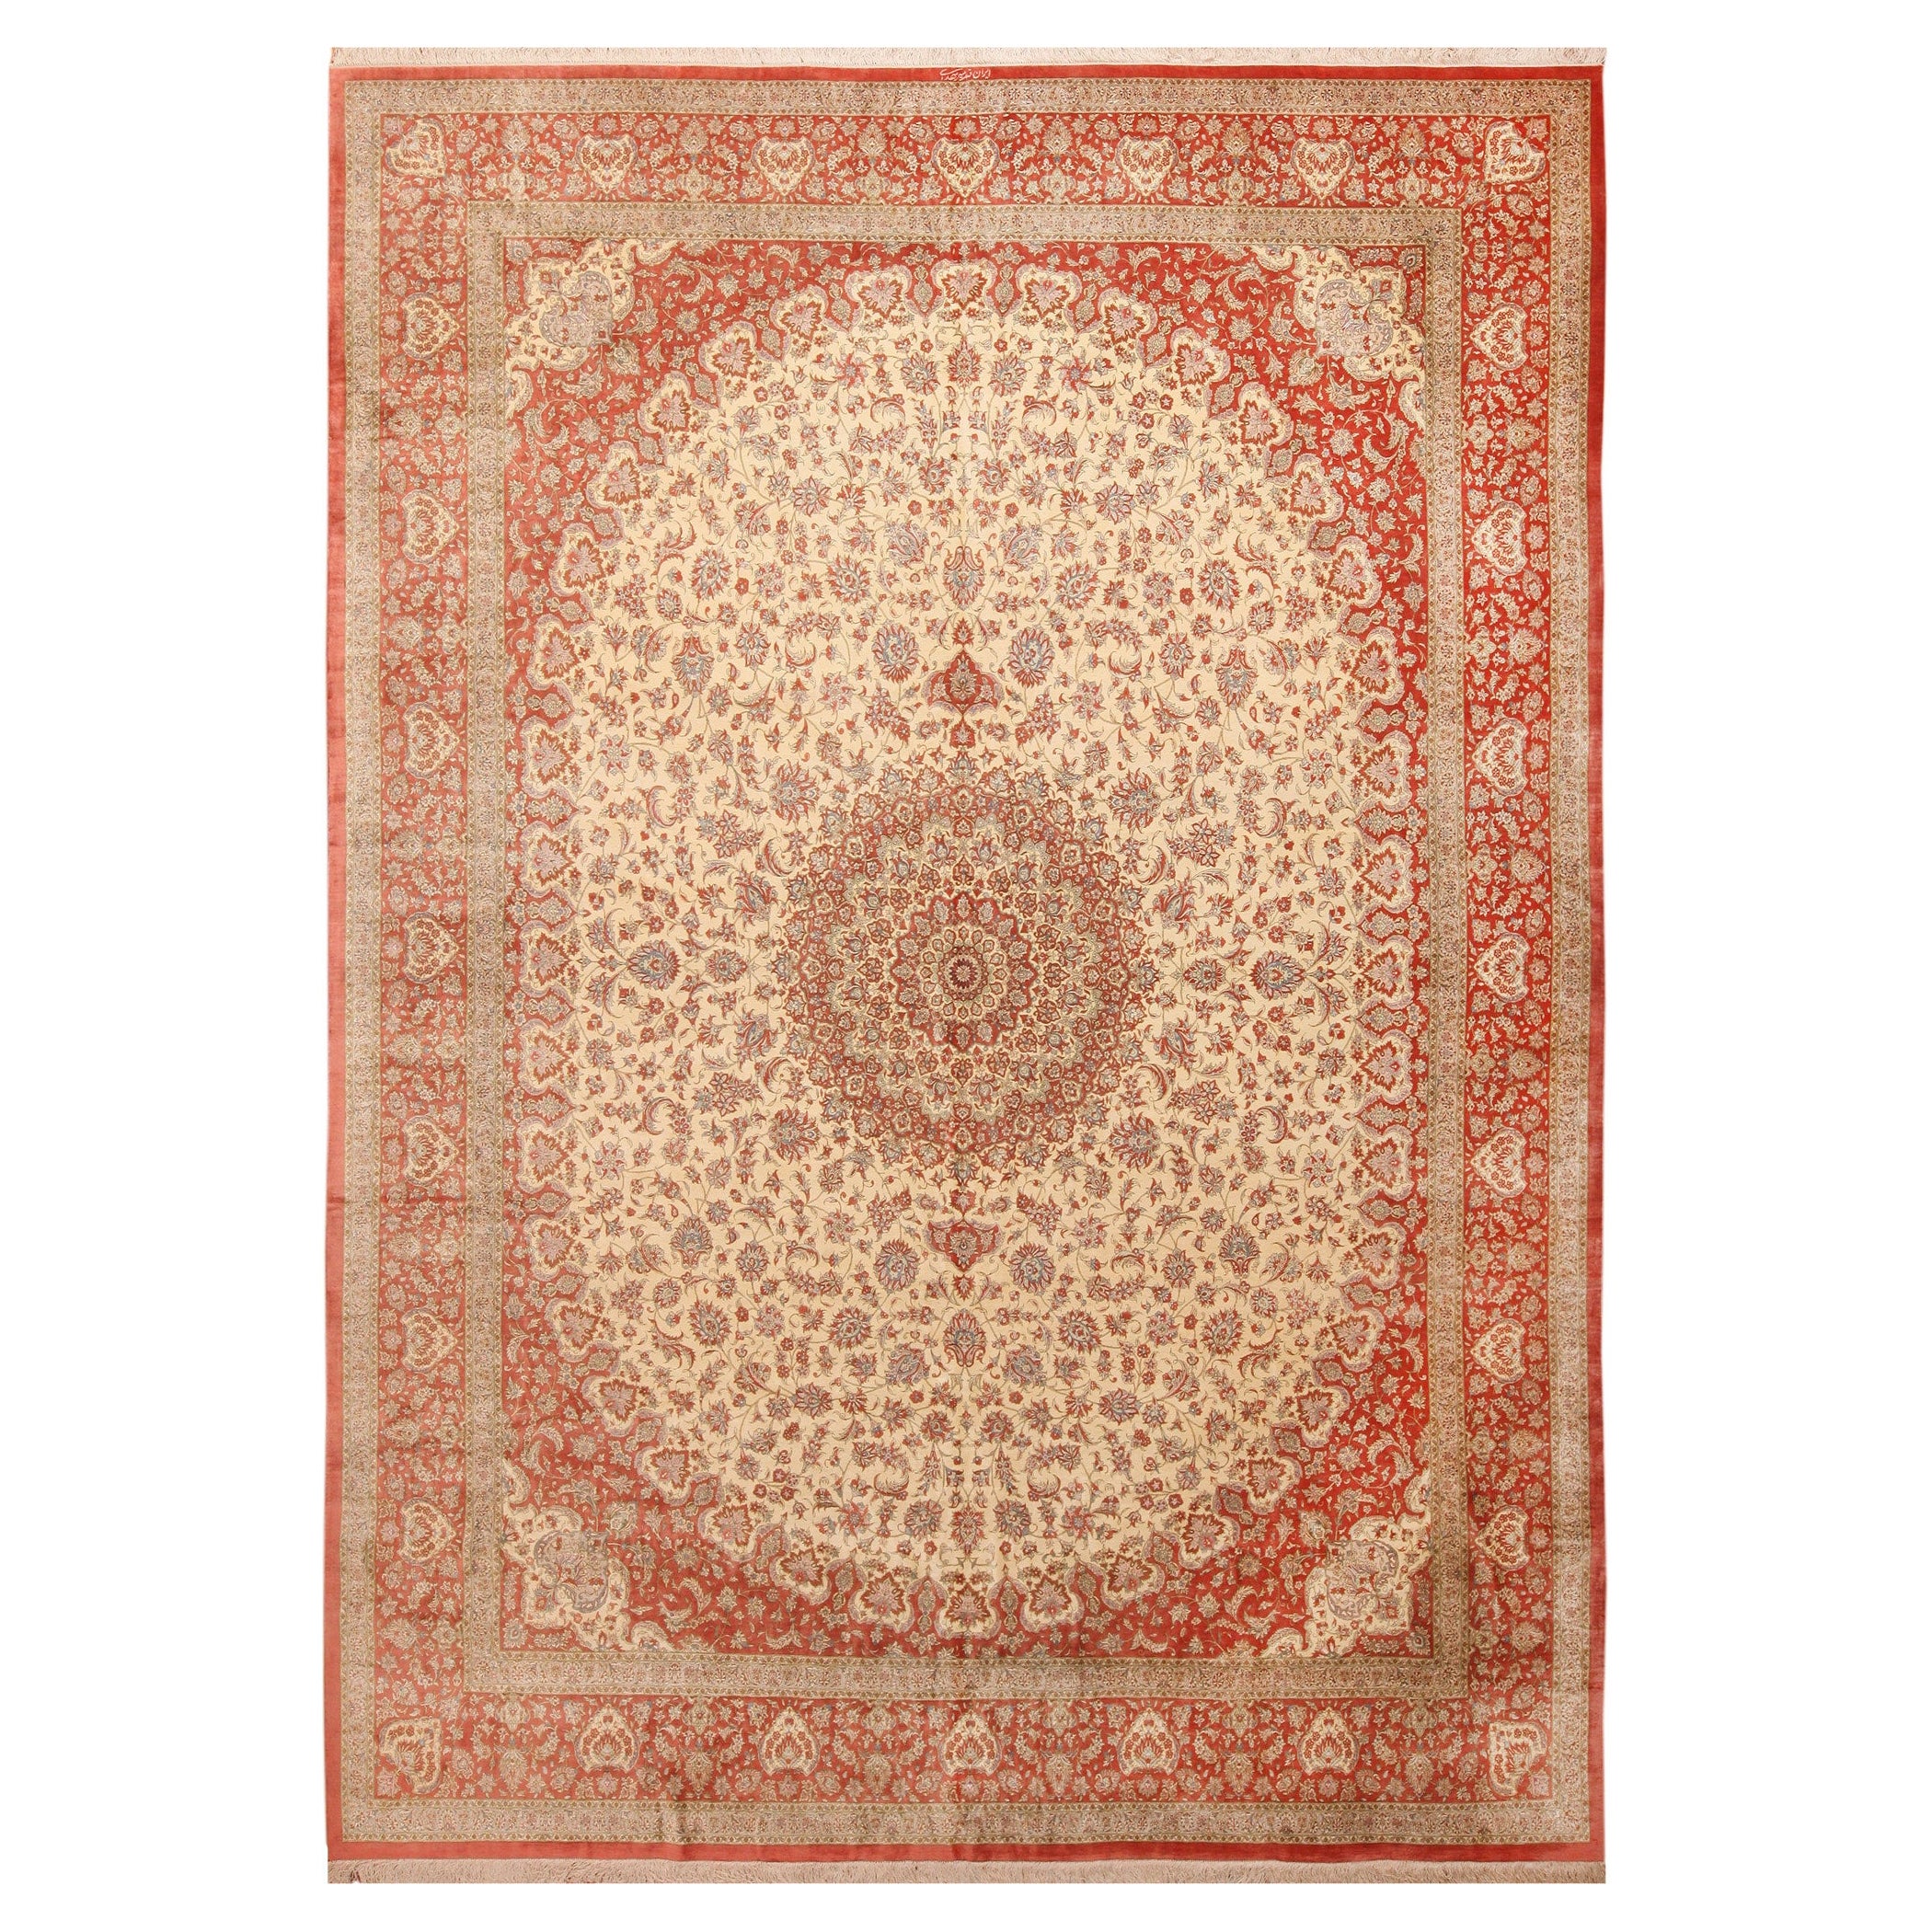 Beautiful Fine Room Size Vintage Persian Silk Qum Rug 10' x 13'4" For Sale